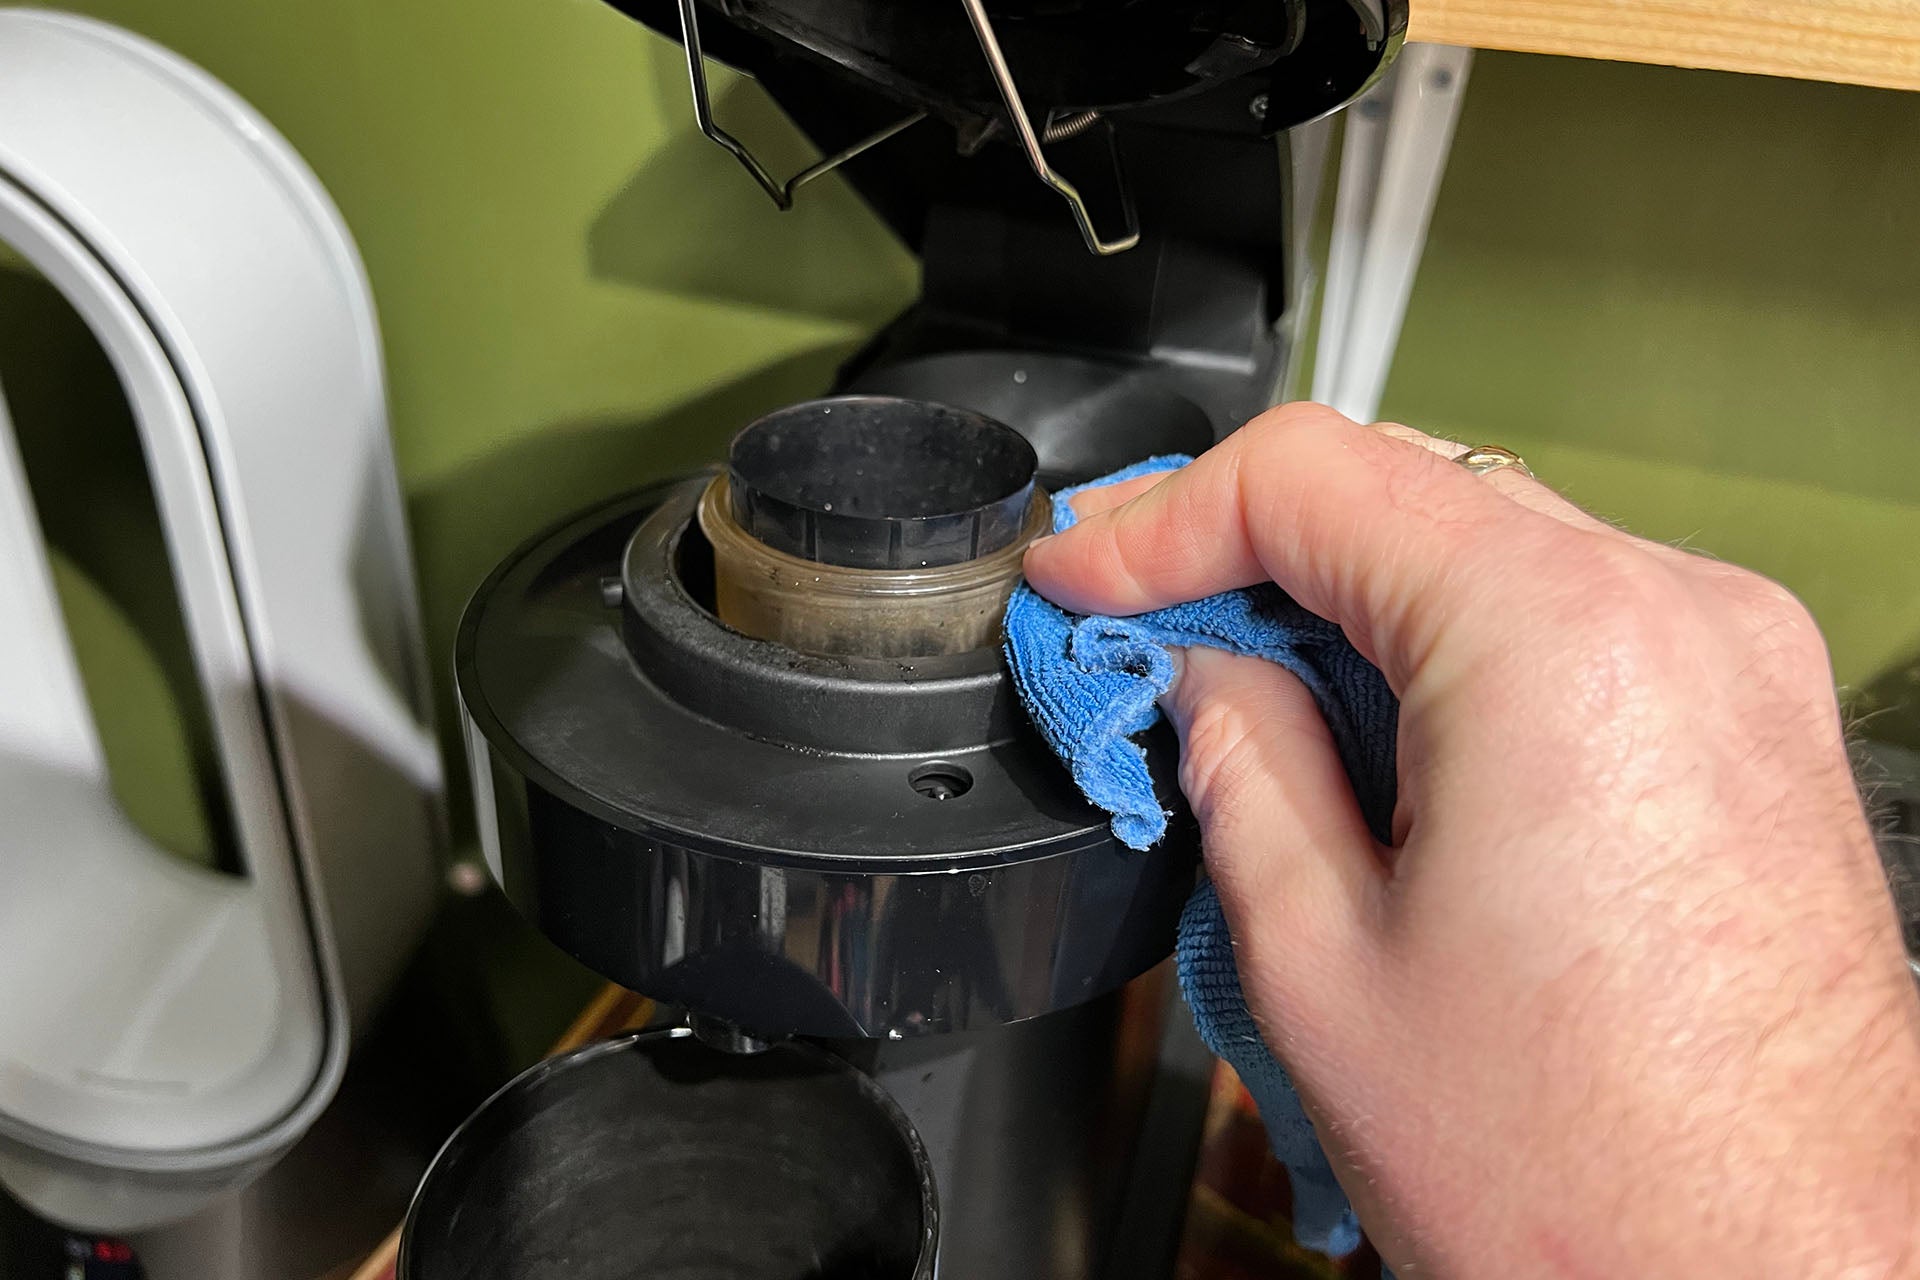 Nespresso Vertuo cleaning